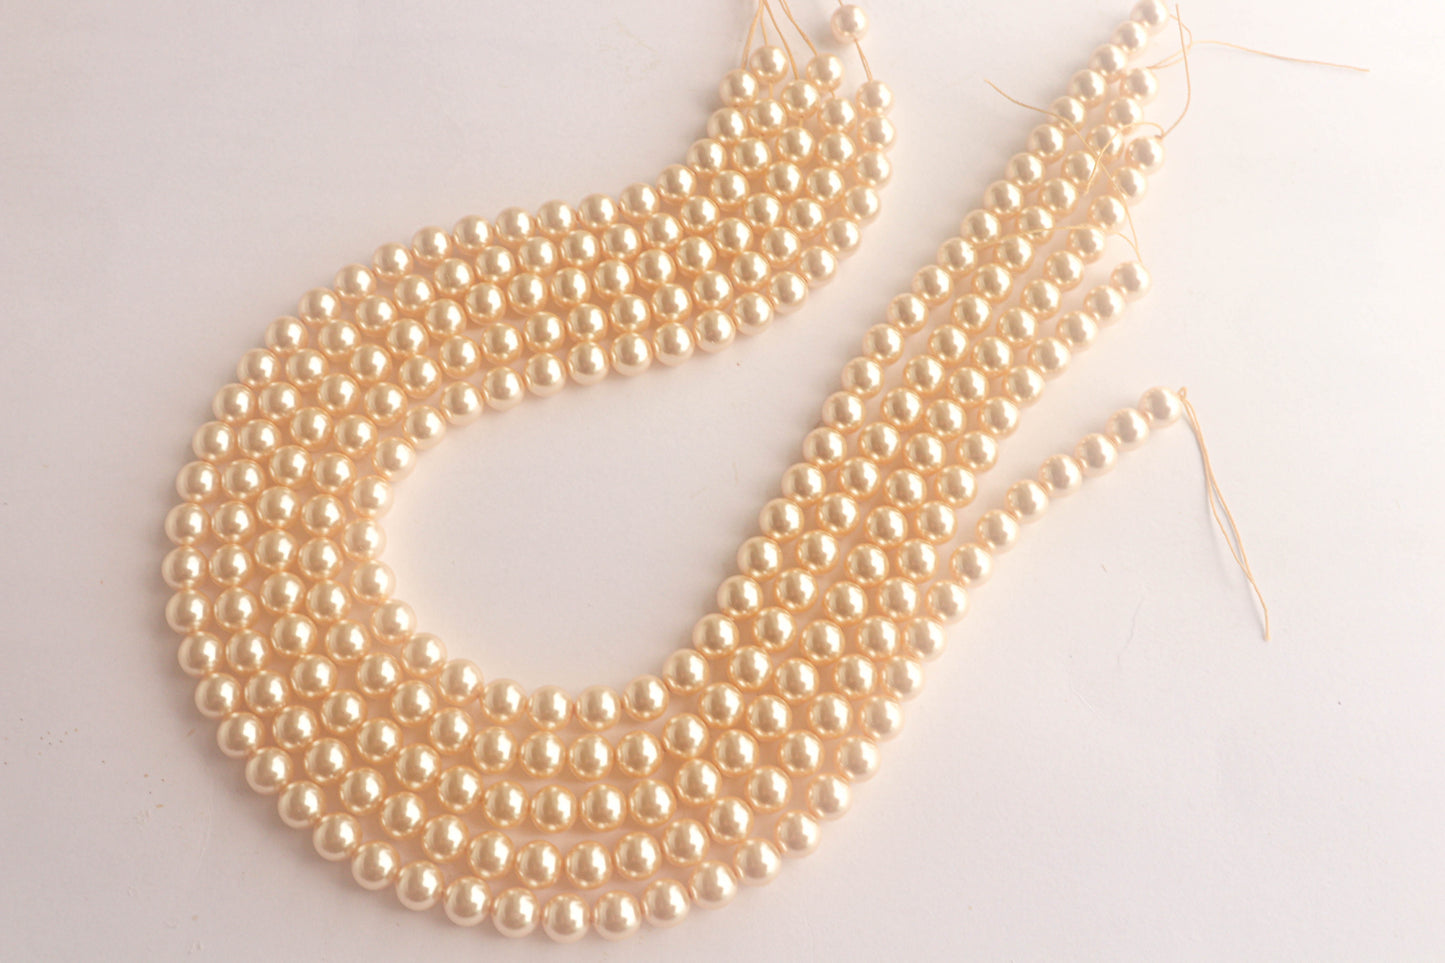 2mm Crystal Light Gold (001 539) Genuine Swarovski 5810 Pearls Round Beads Beadsforyourjewelry